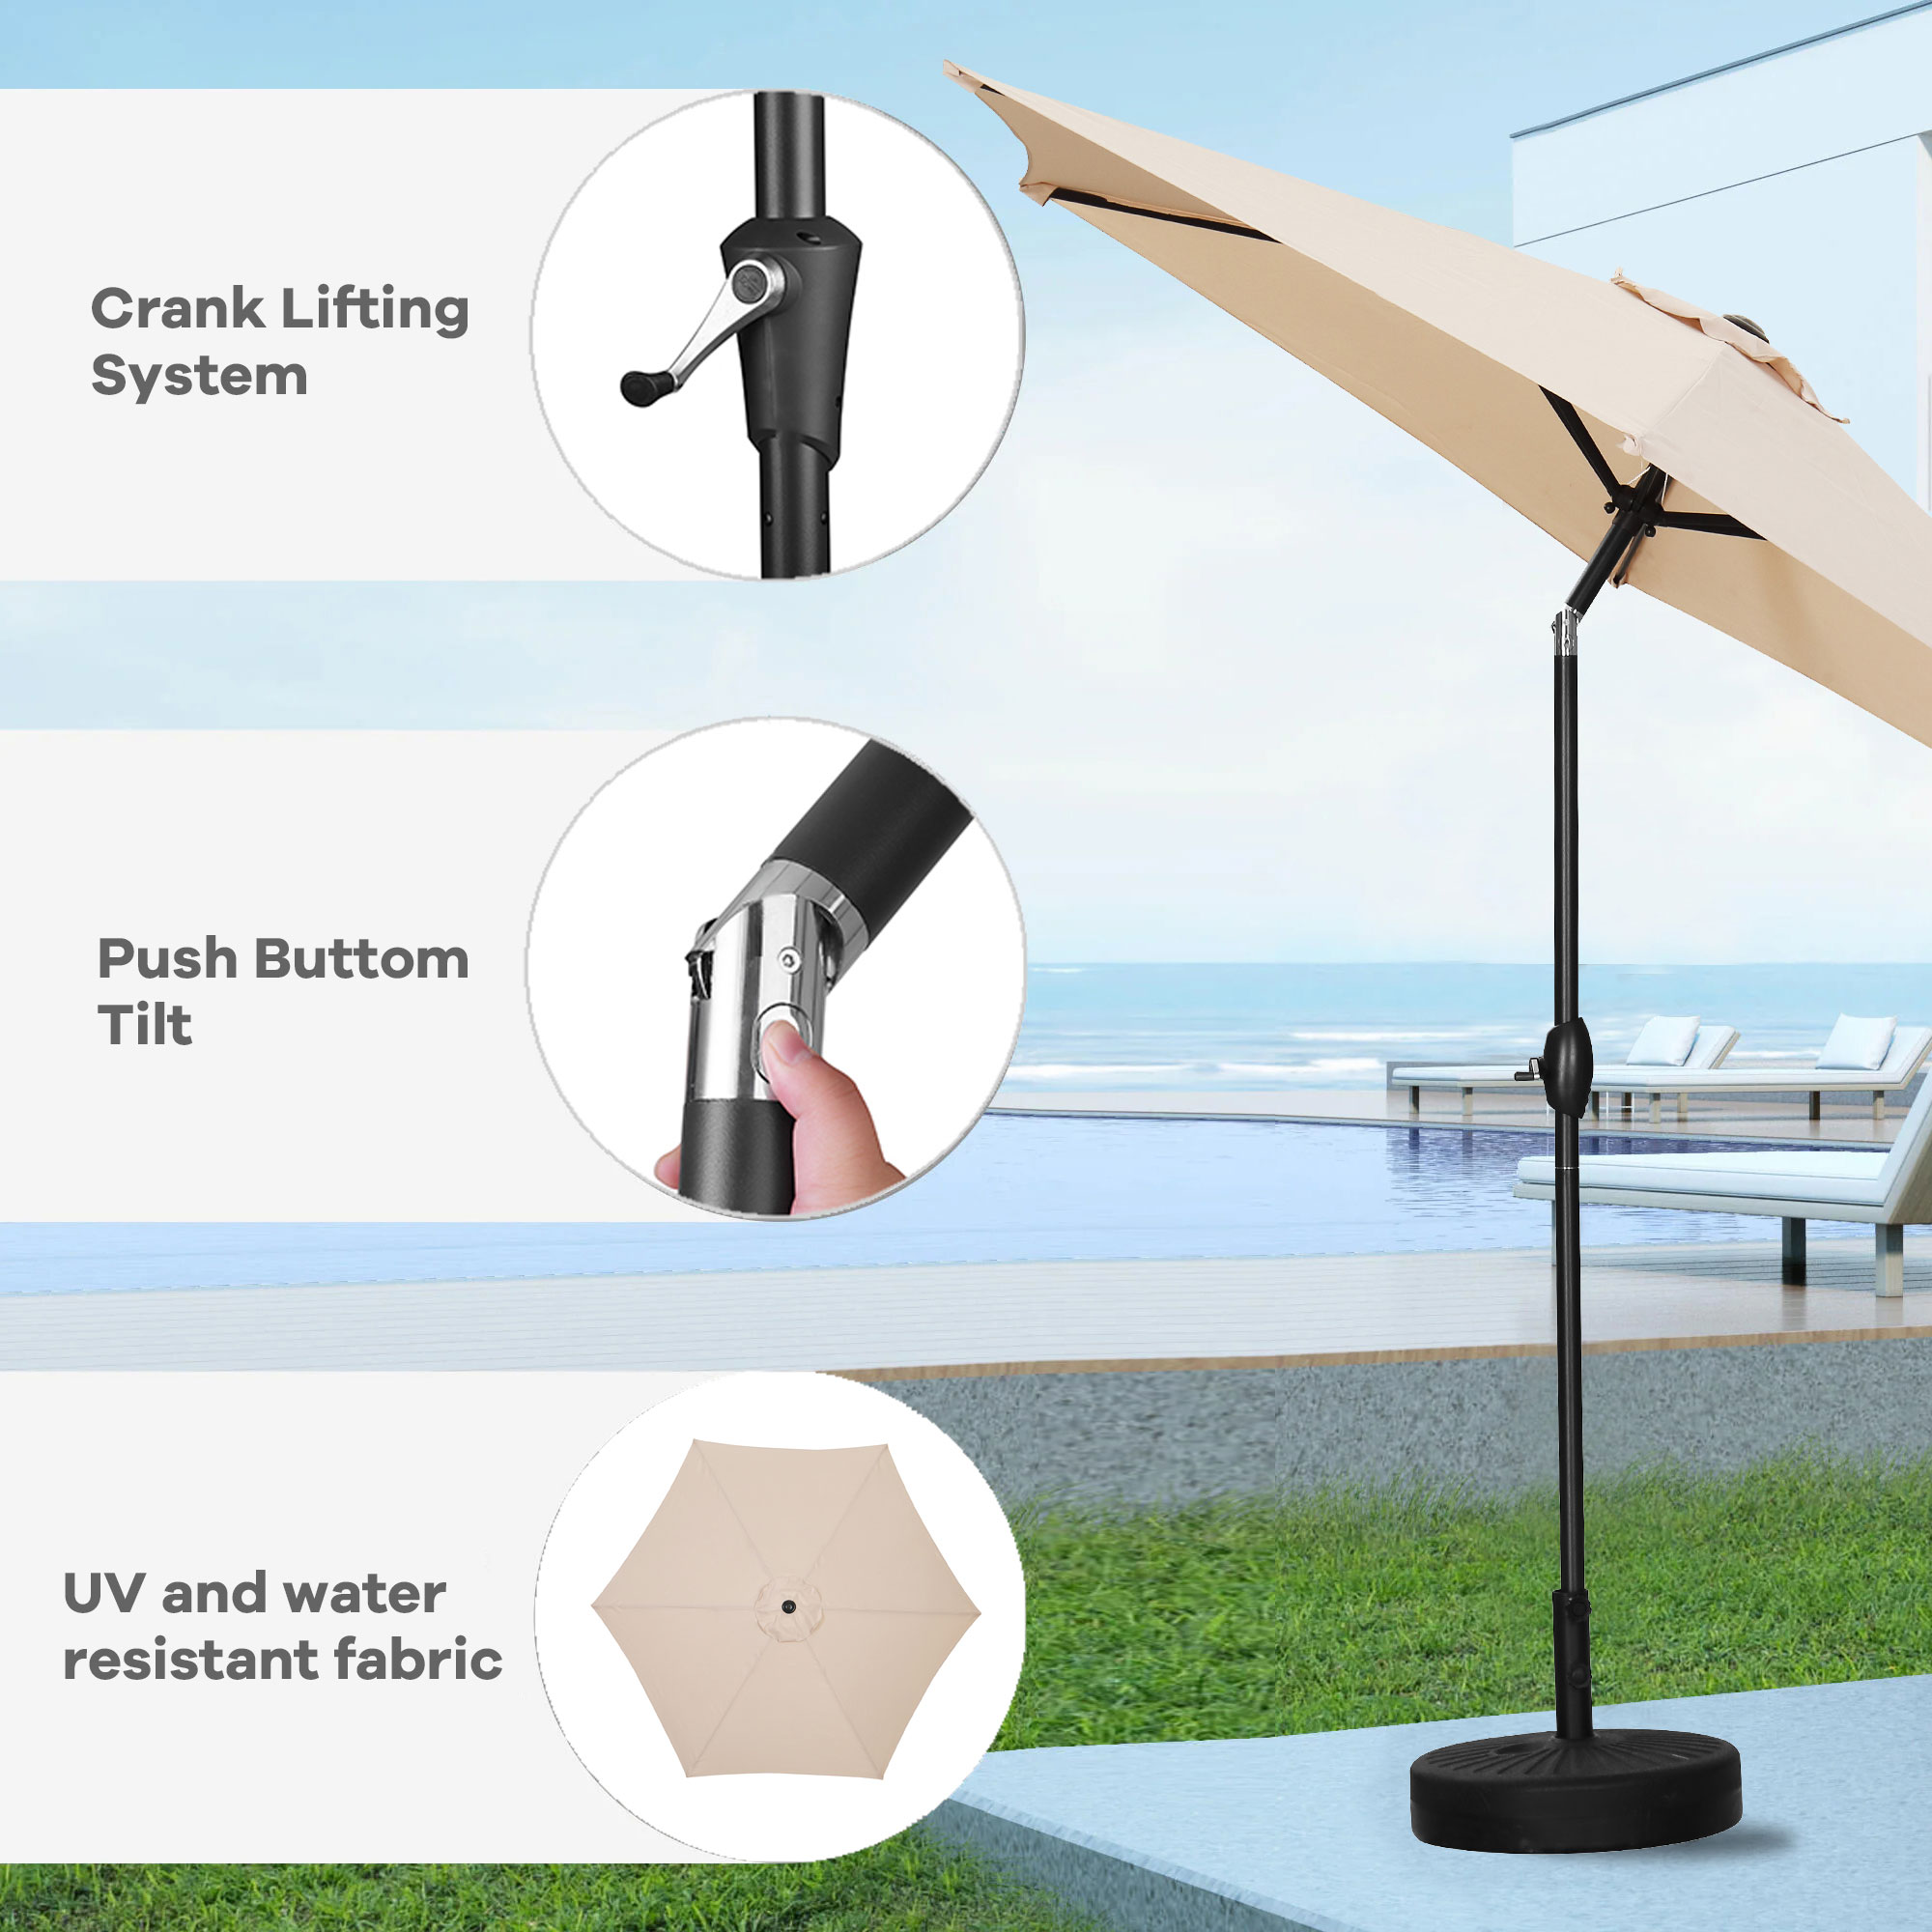 Autlaycil 9ft Outdoor Patio Umbrellass 6 Ribs w/ Tilt & Crank Patio Table Umbrella-Khaki - image 5 of 6